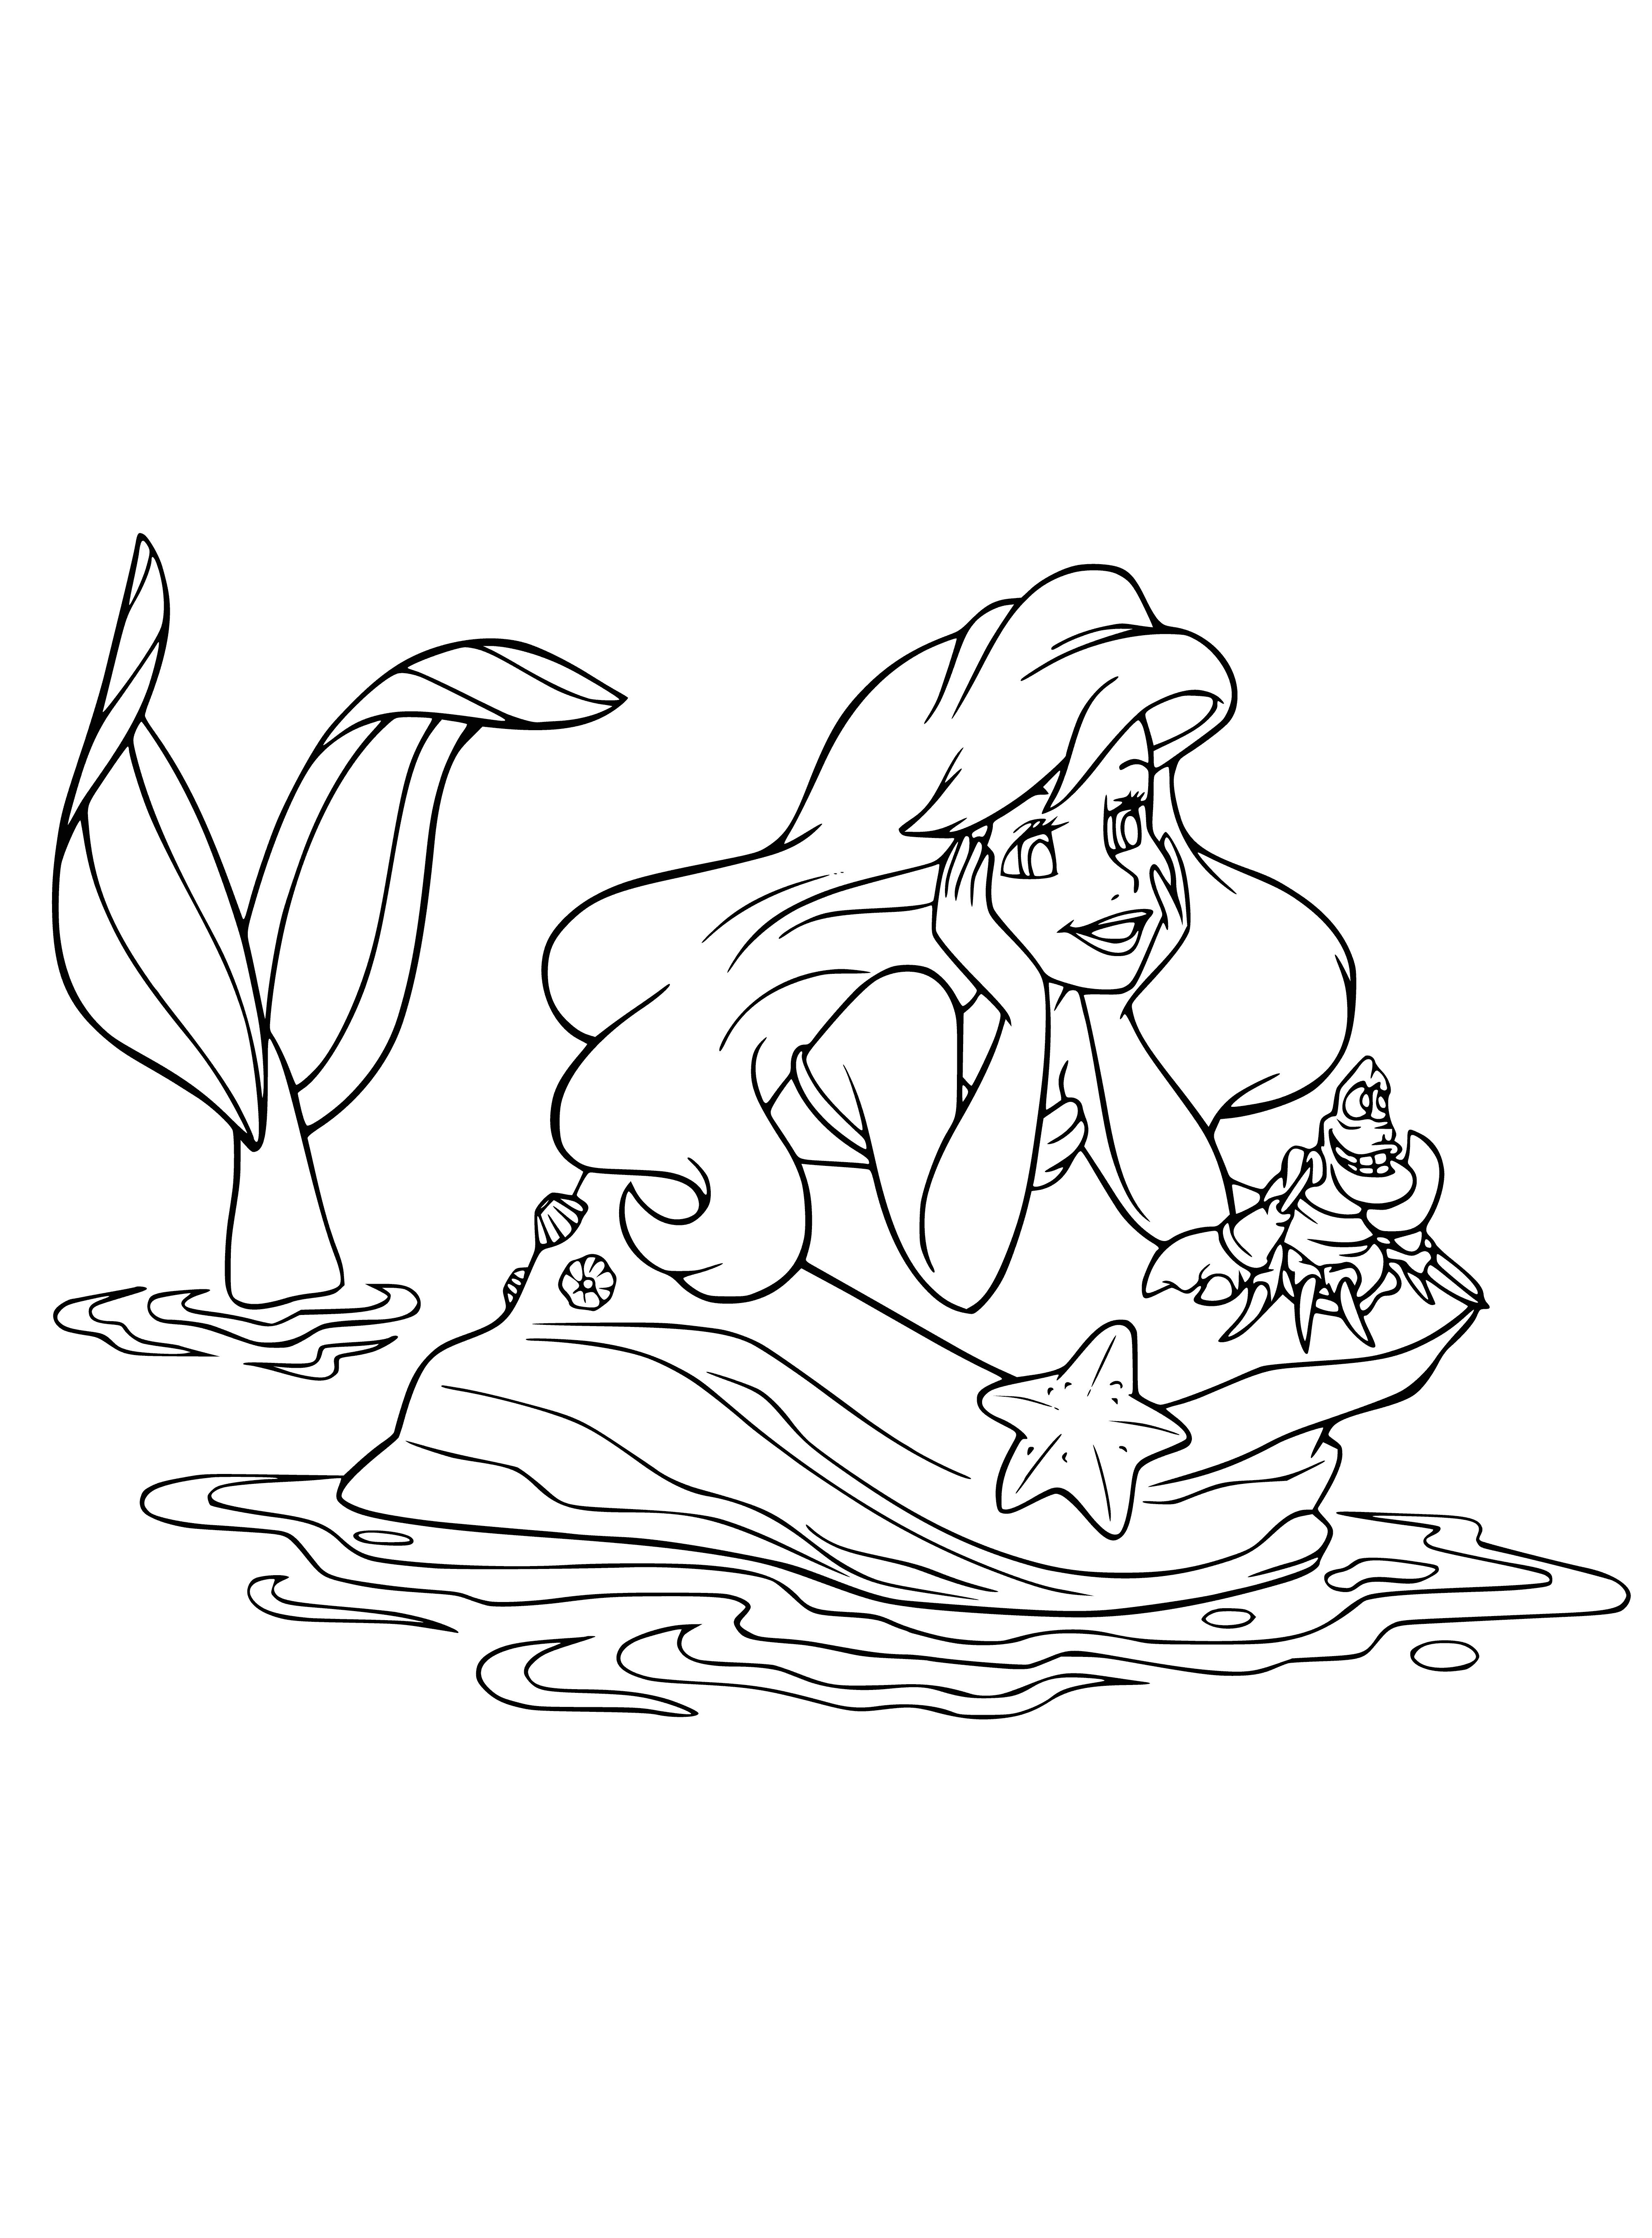 Little Mermaid Dreams coloring page